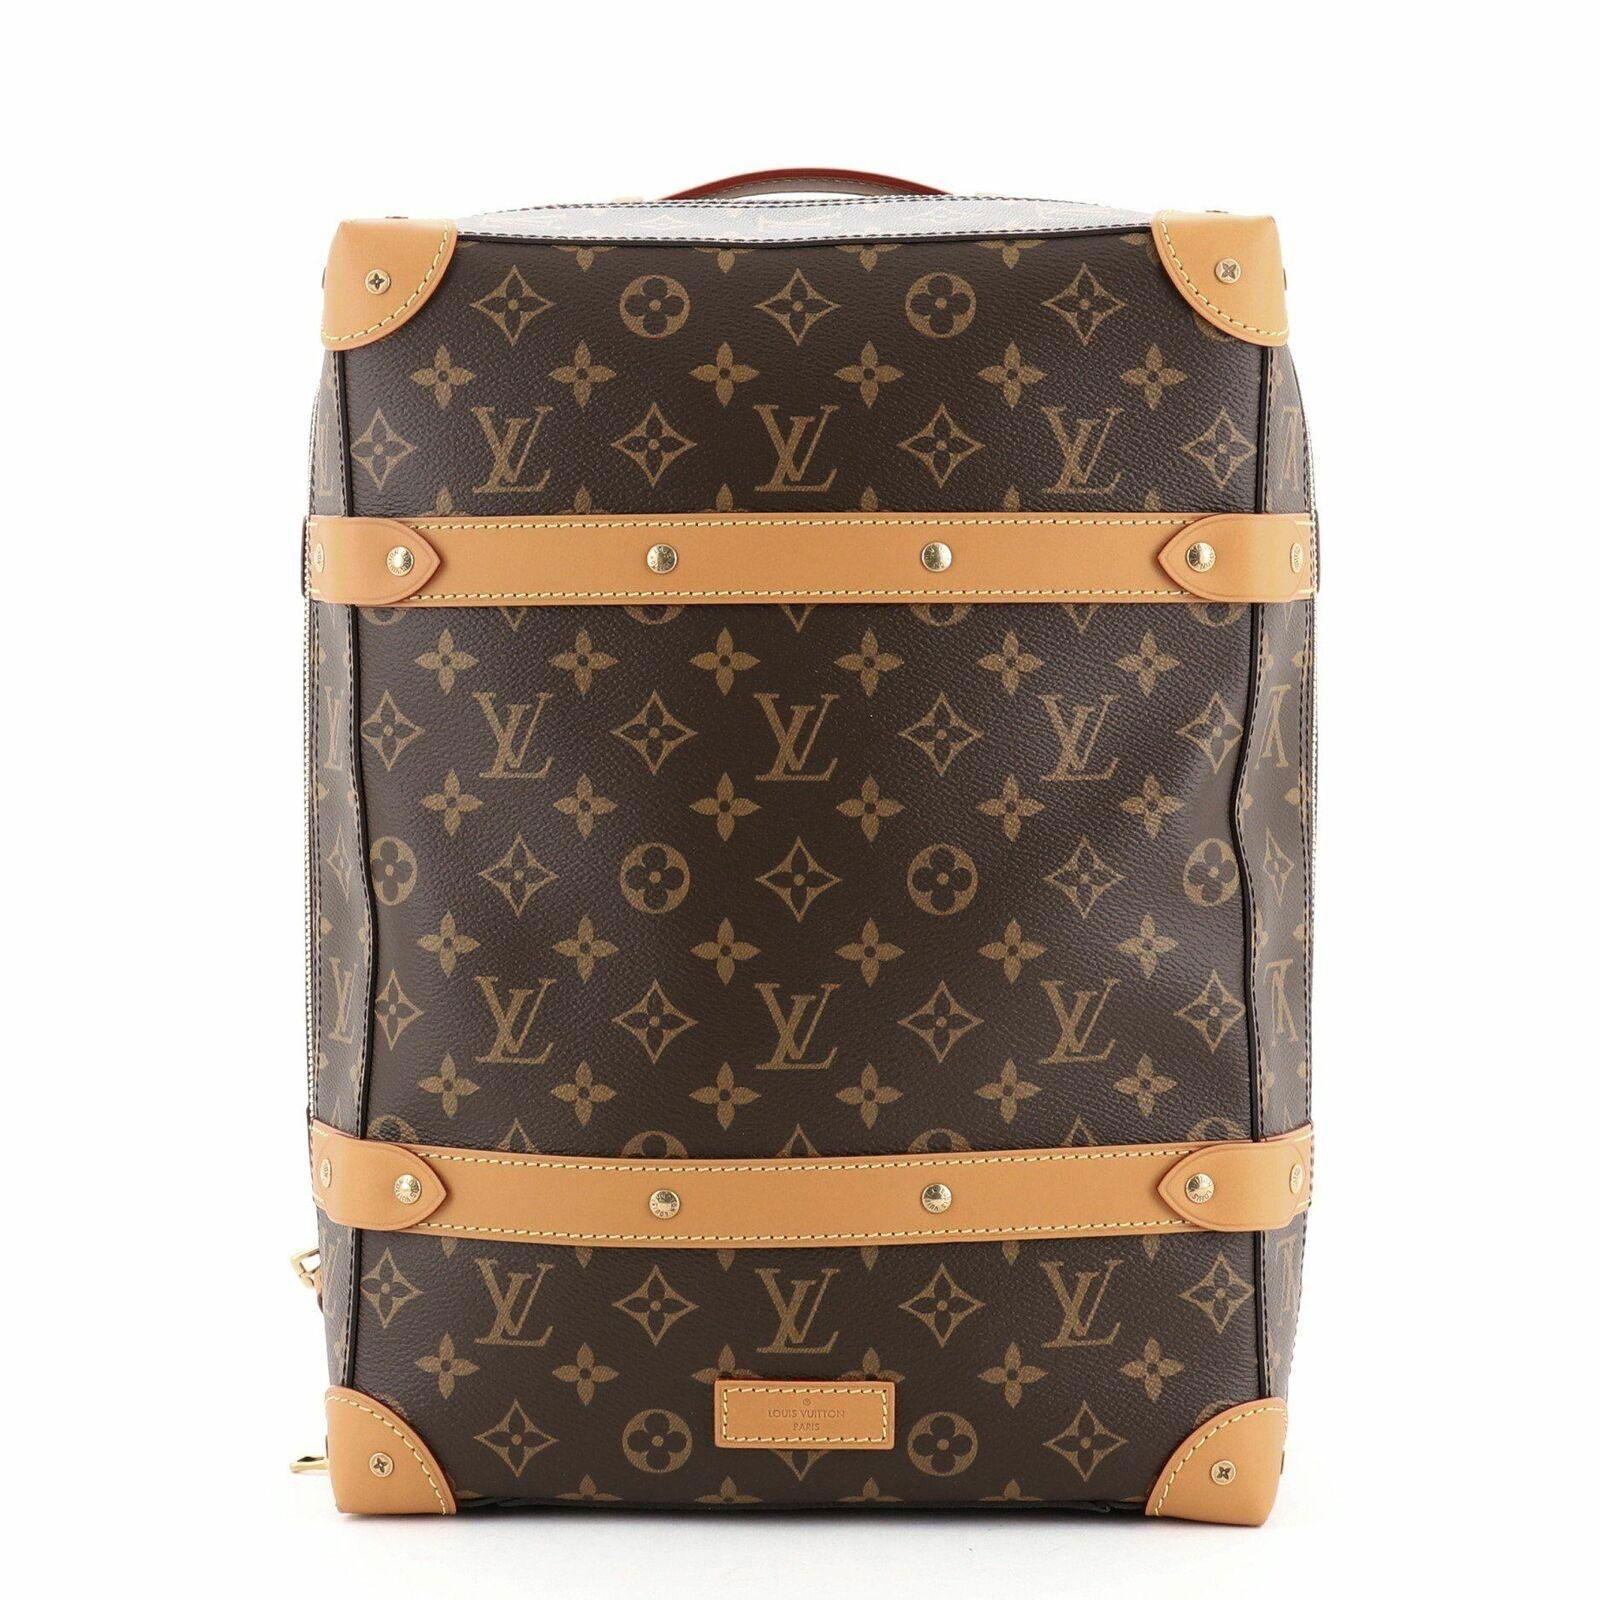 Louis Vuitton Soft Trunk Backpack Monogram Canvas PM Men Women fashion brand bag